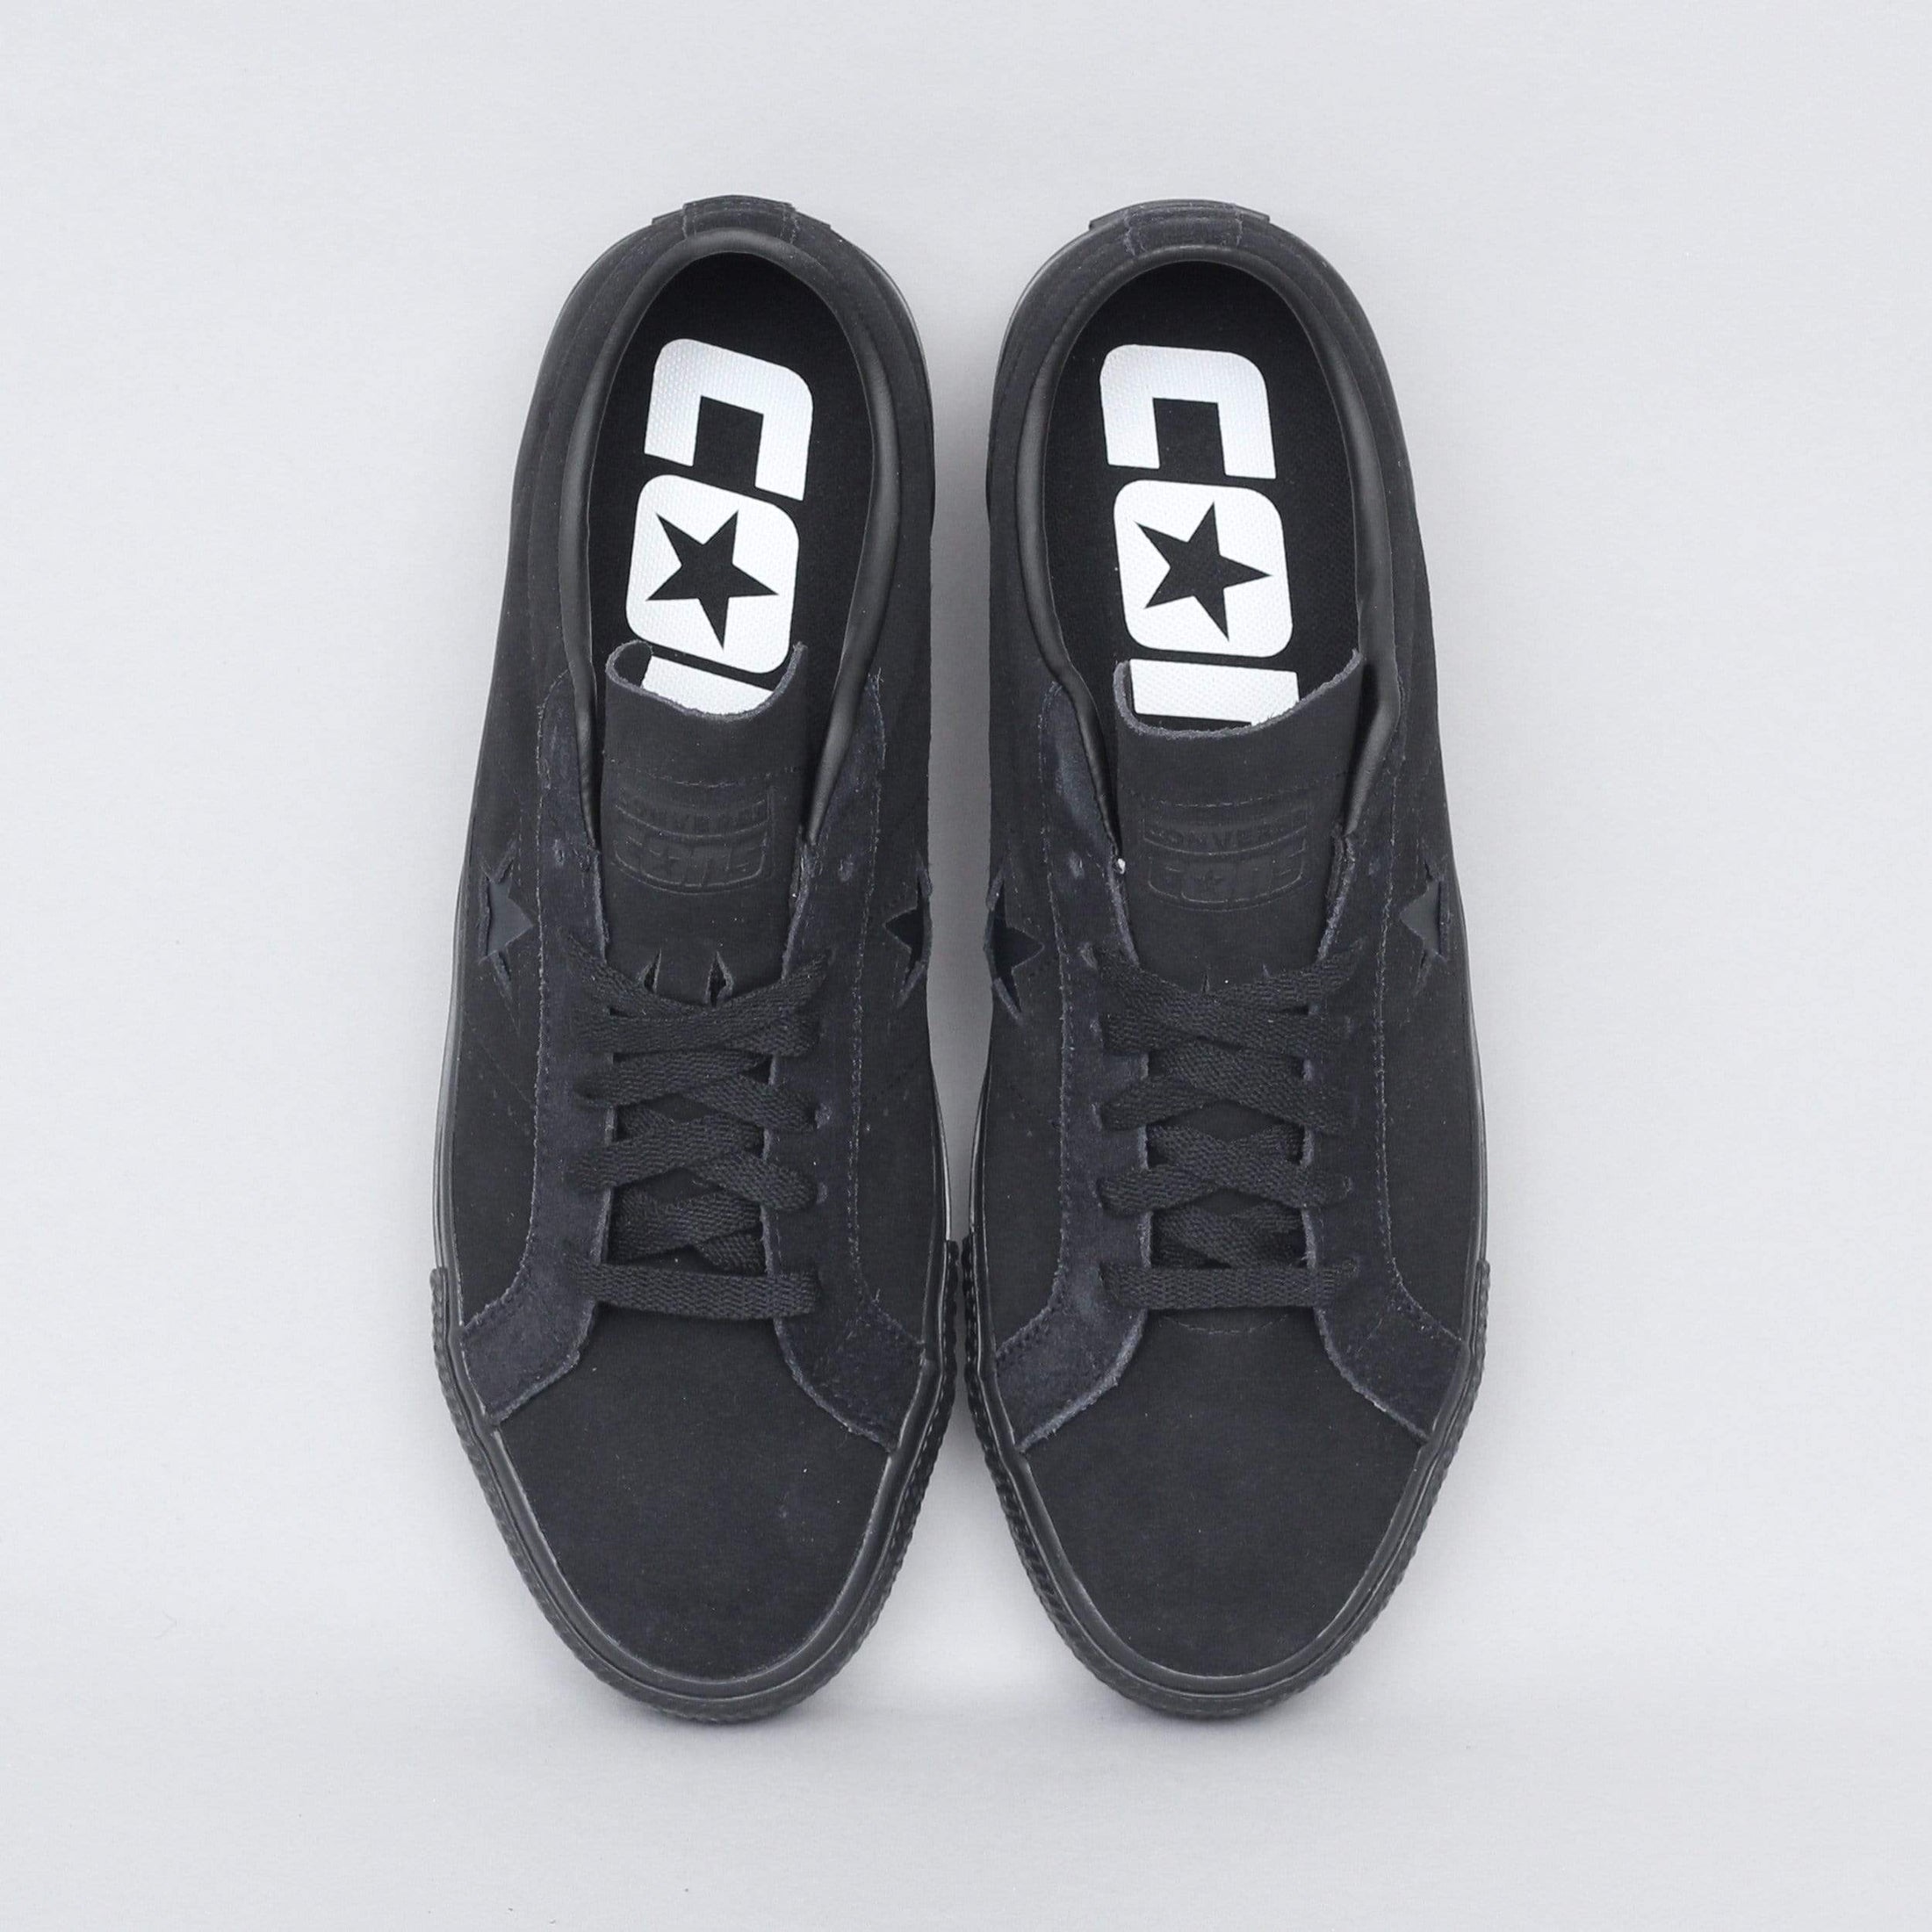 Converse One Star Pro OX Suede Shoes Black / Black / Black